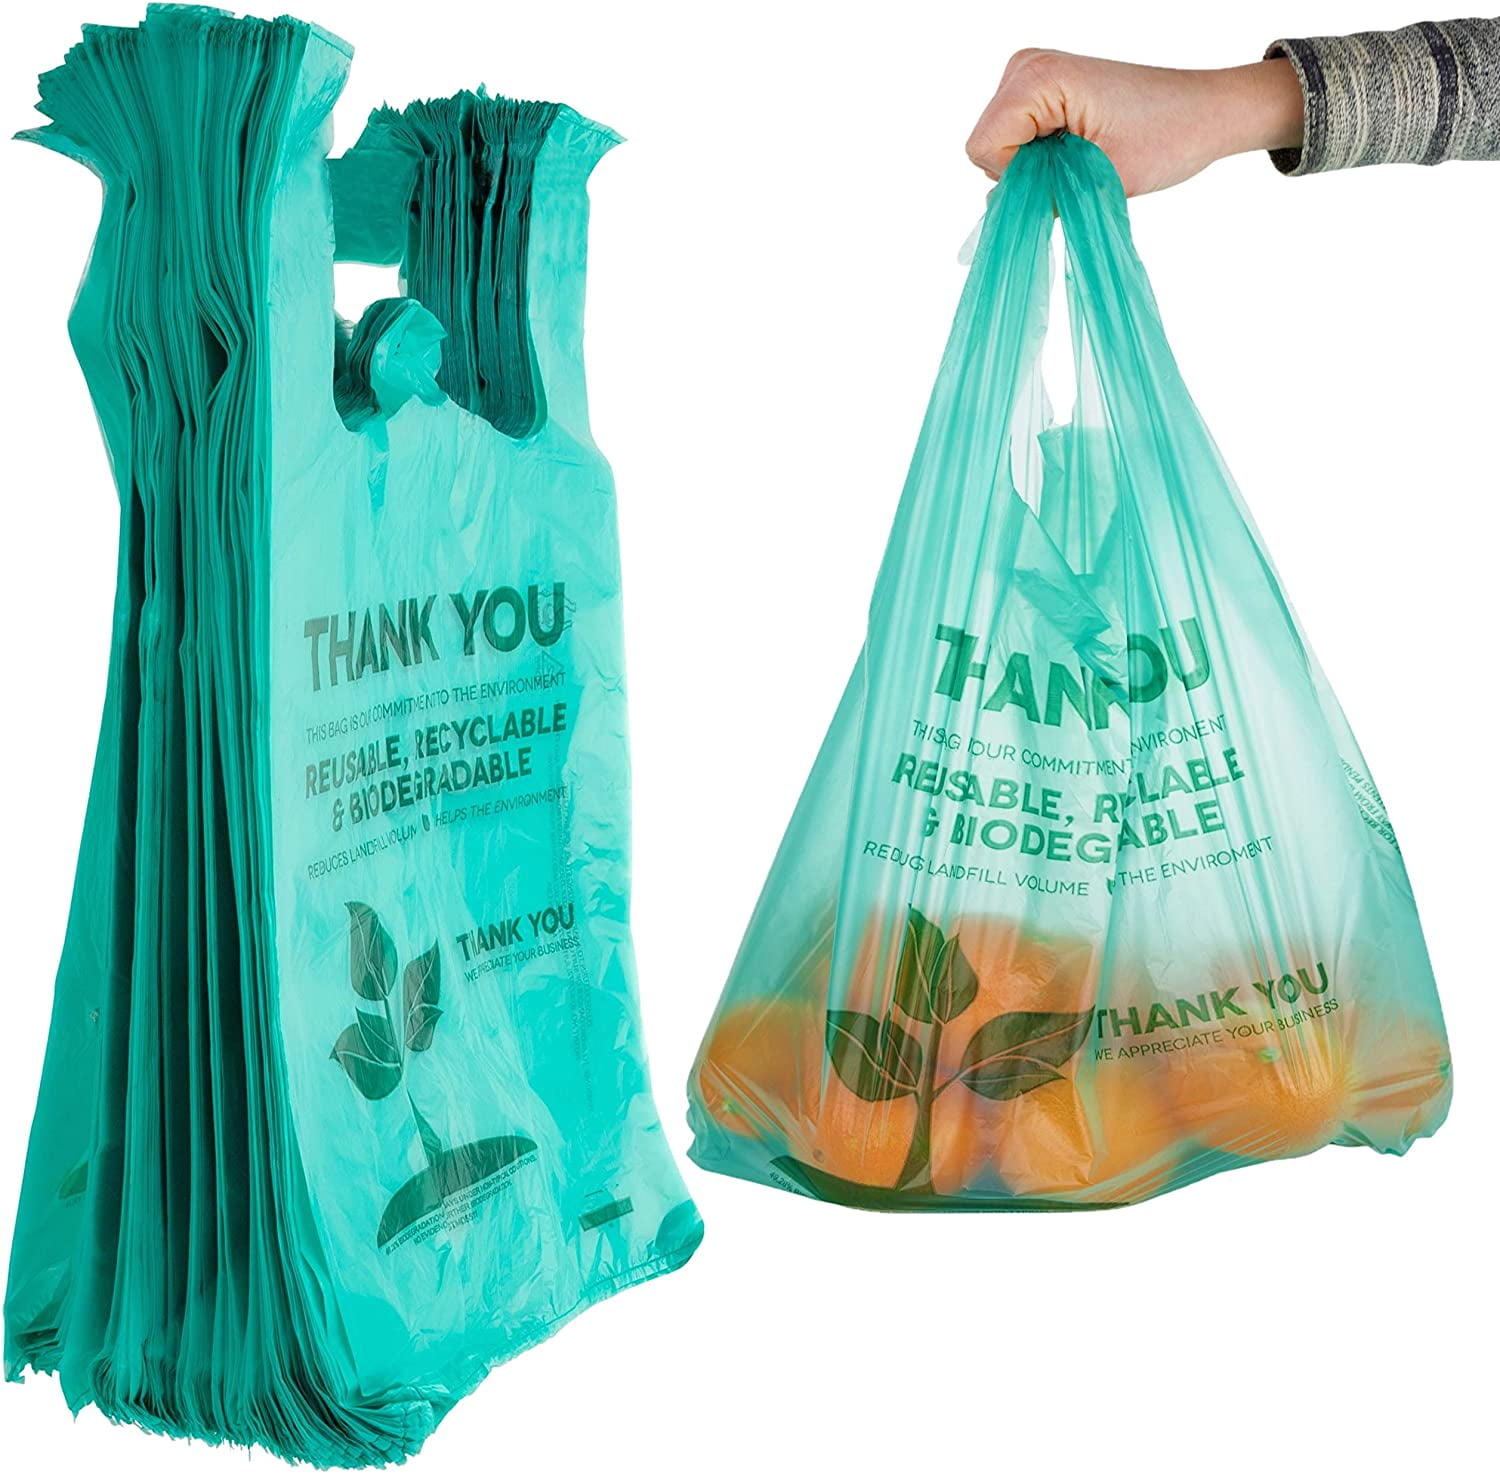 Biodegradable Trash Bags: Uses, Benefits + 4 Eco-Friendly Options